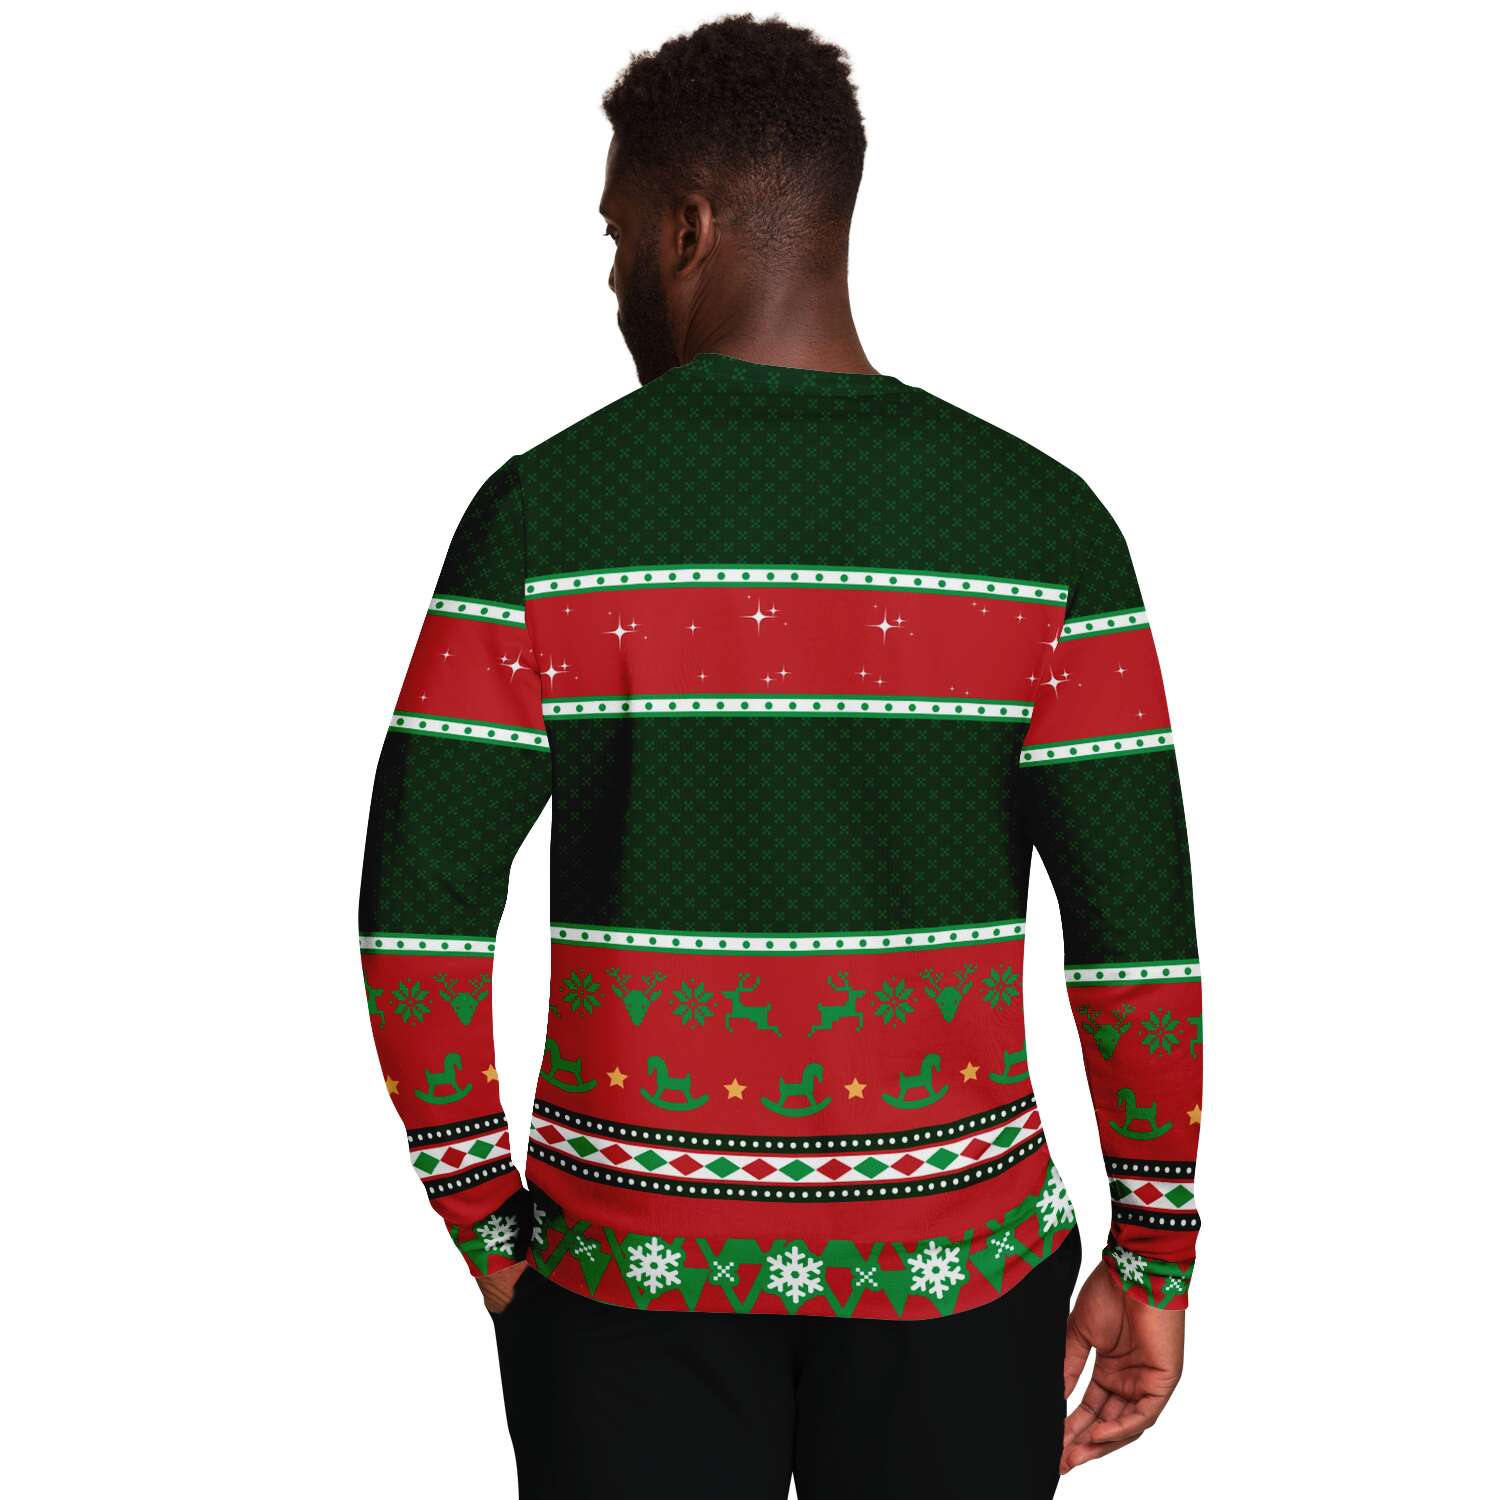 i am the reason santa has a naughty list christmas ugly sweatshirt